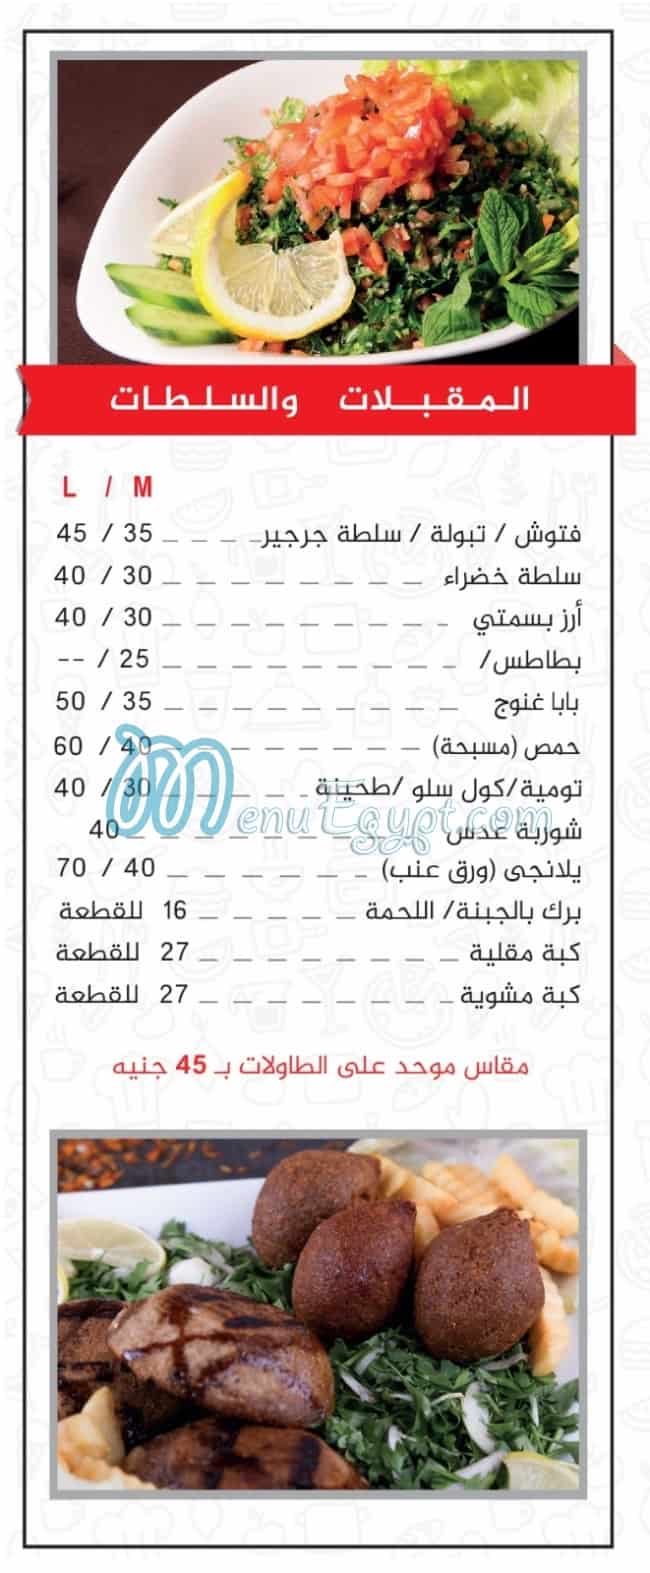 Al Aseel menu Egypt 3